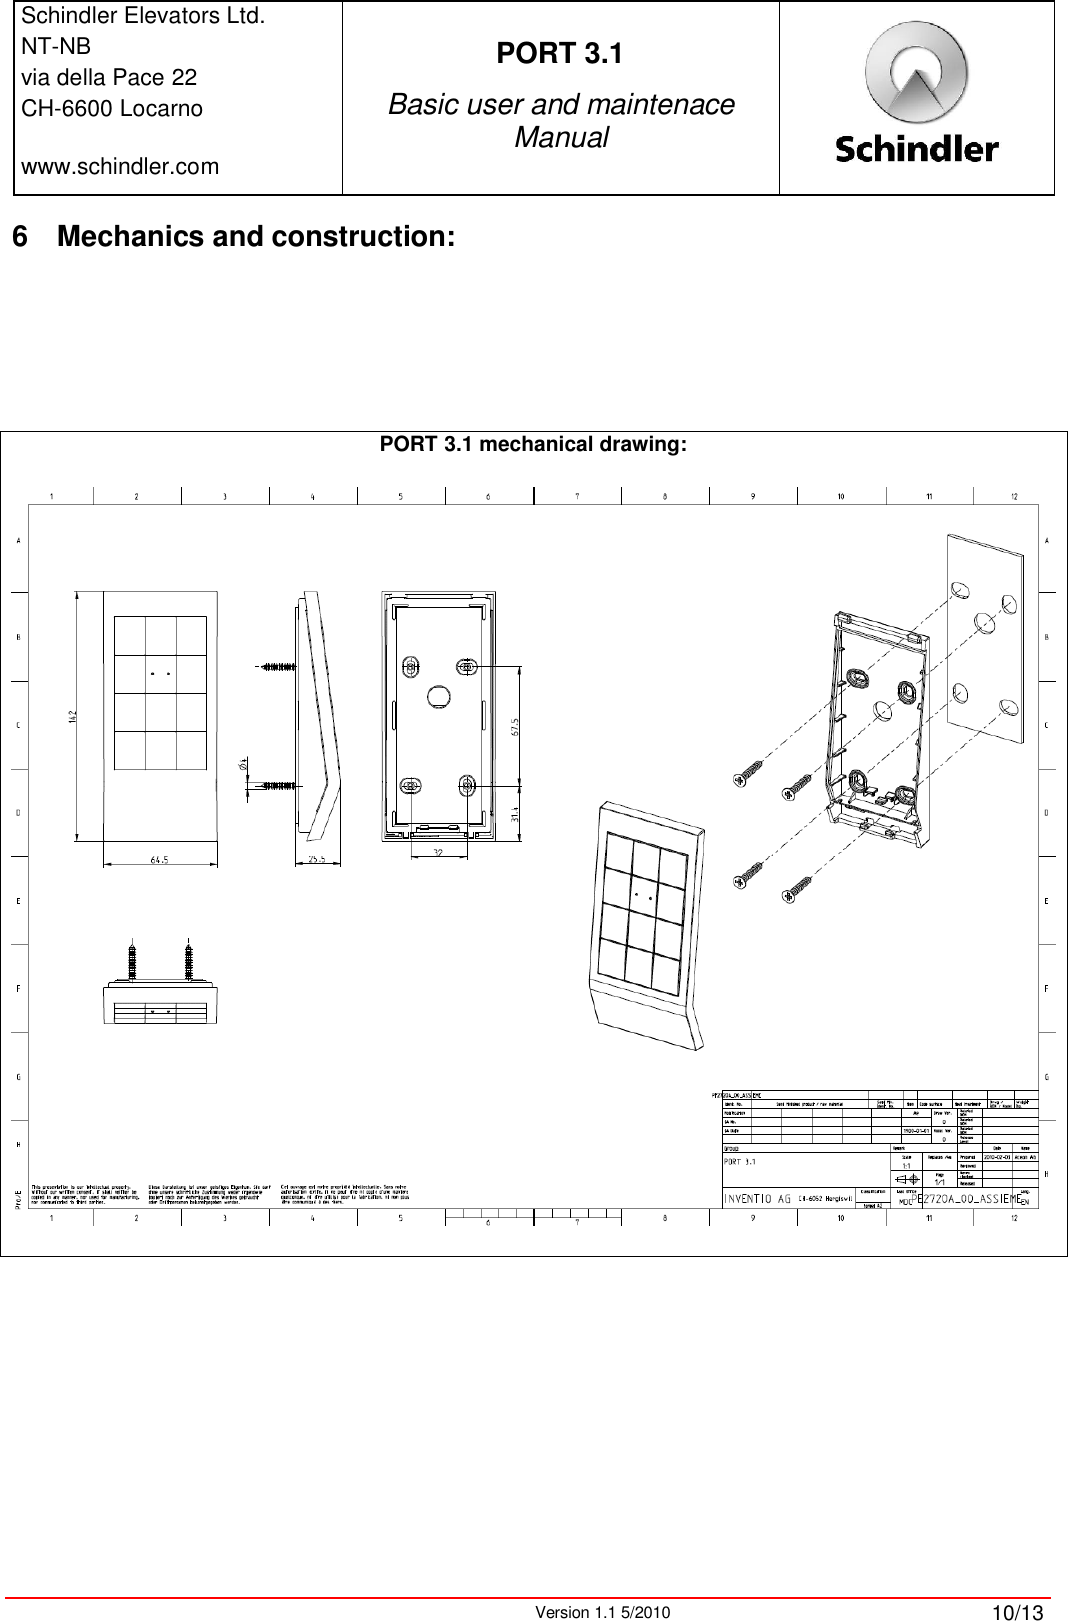 Schindler Elevators Ltd.NT-NBvia della Pace 22CH-6600 Locarnowww.schindler.comPORT 3.1Basic user and maintenace ManualVersion 1.1 5/2010 10/136 Mechanics and construction:PORT 3.1 mechanical drawing: